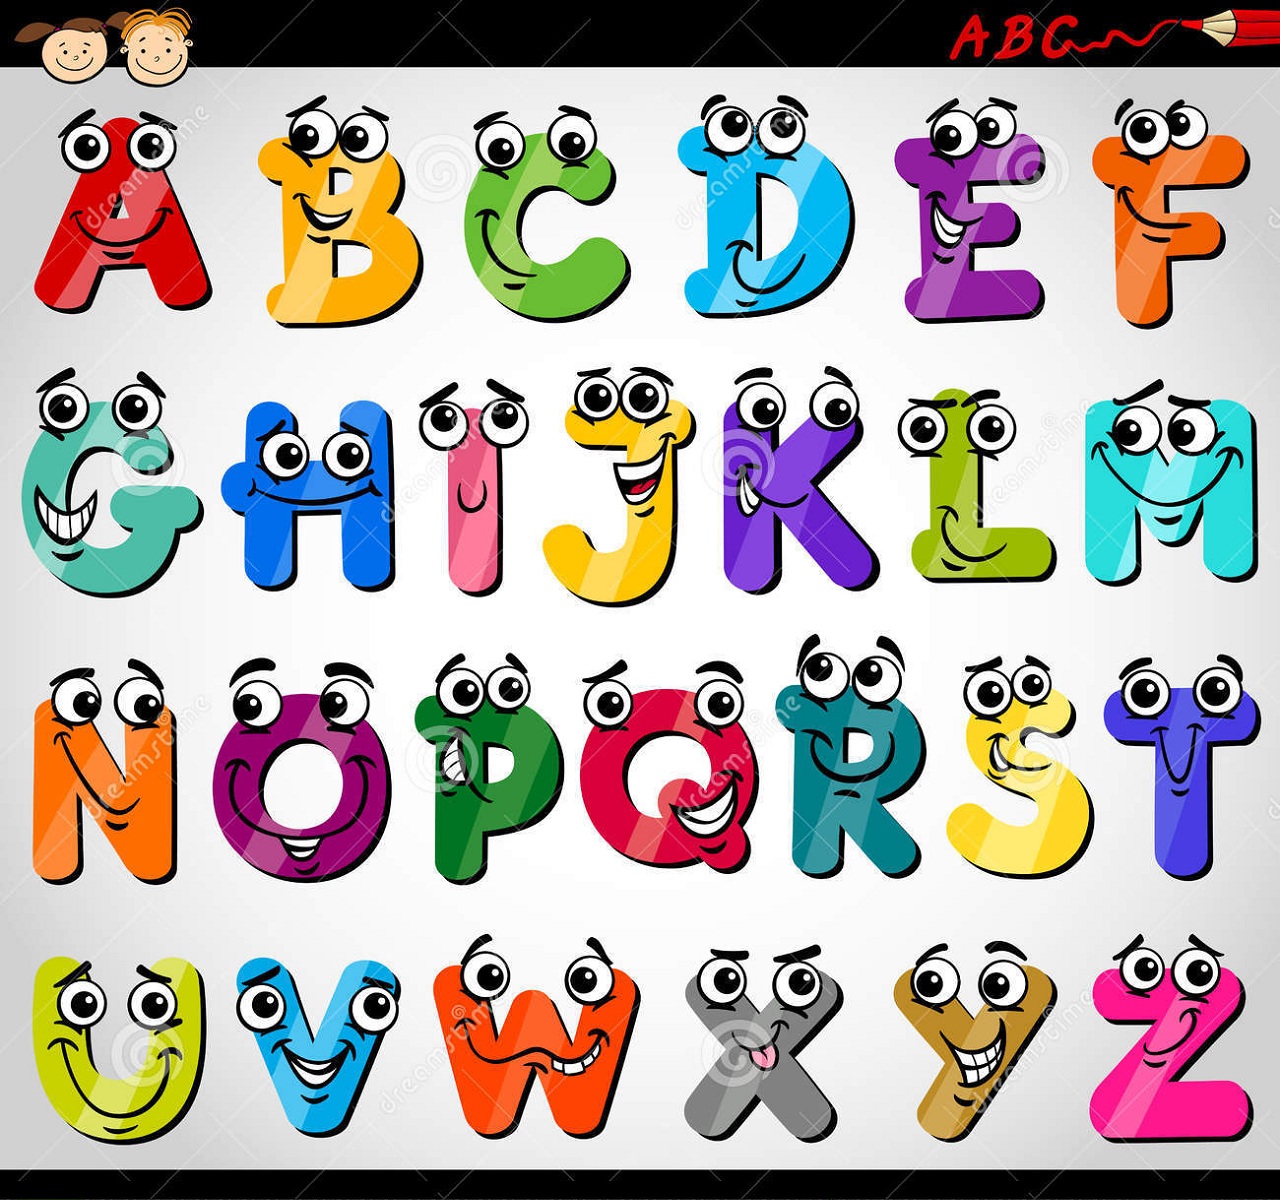 Capital Letters Alphabet for Kids.